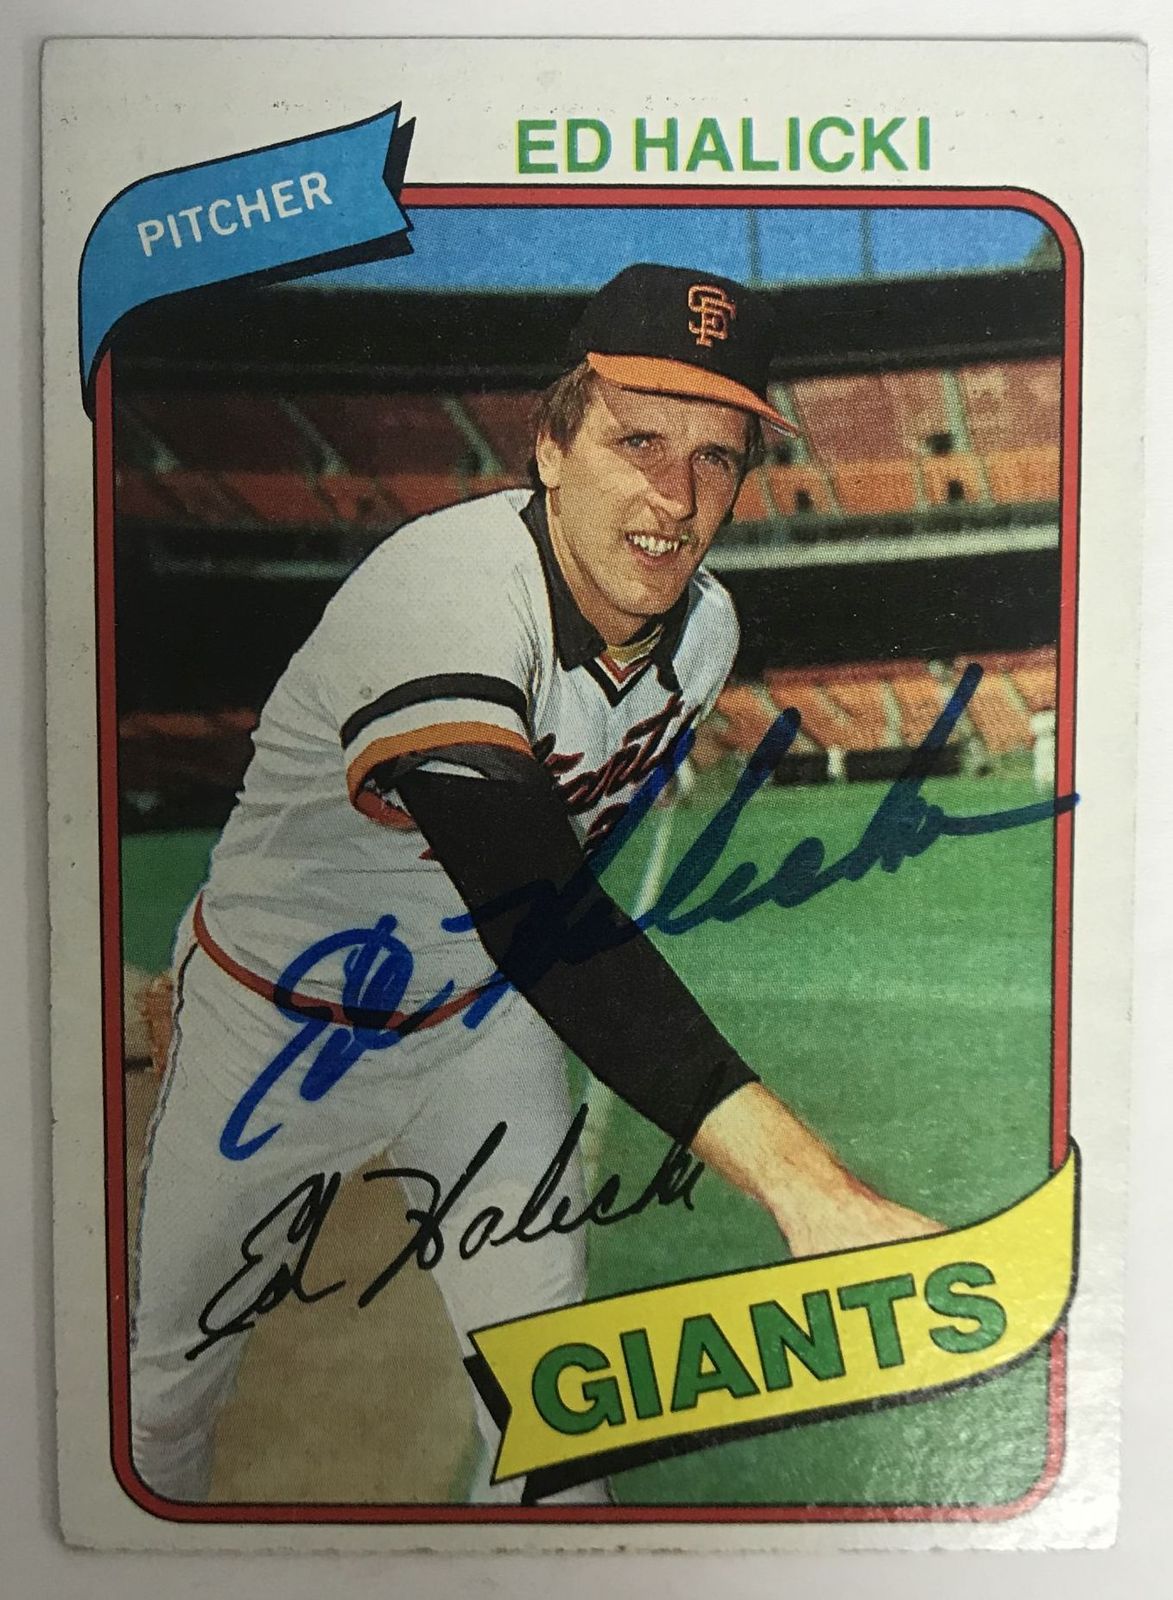 Primary image for Ed Halicki Signed Autographed 1980 Topps Baseball Card - San Francisco Giants